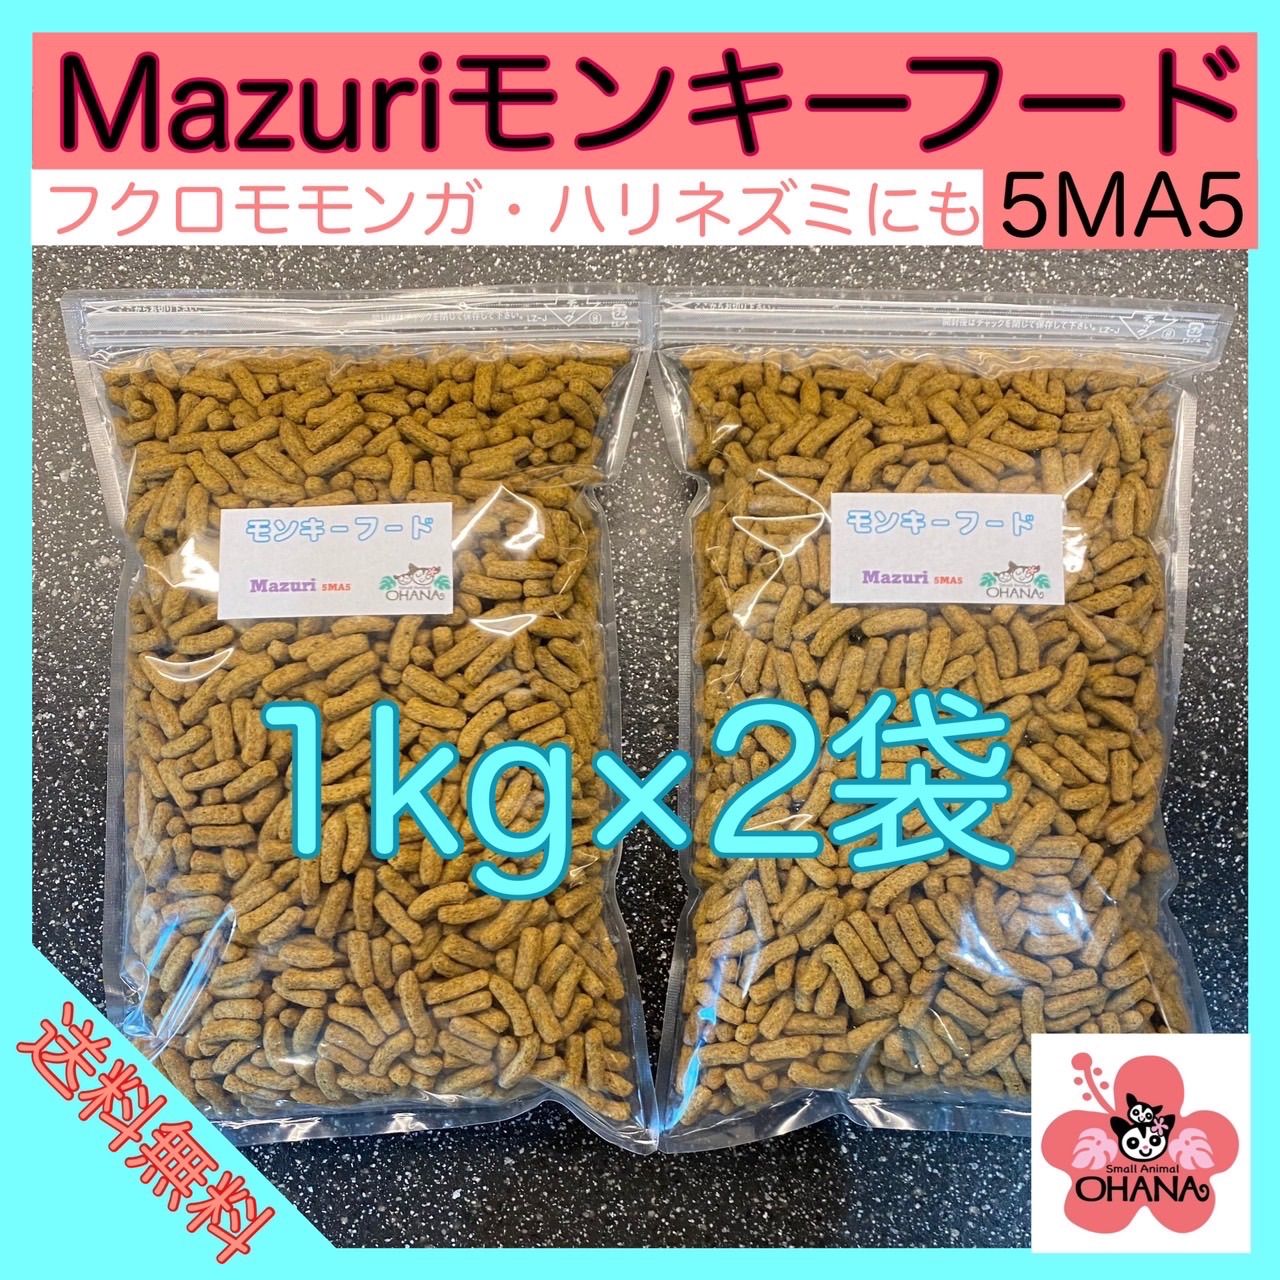 mazuri モンキーフード 1kg 5MA5 ハリネズミ フクロモモンガ - 小動物用品